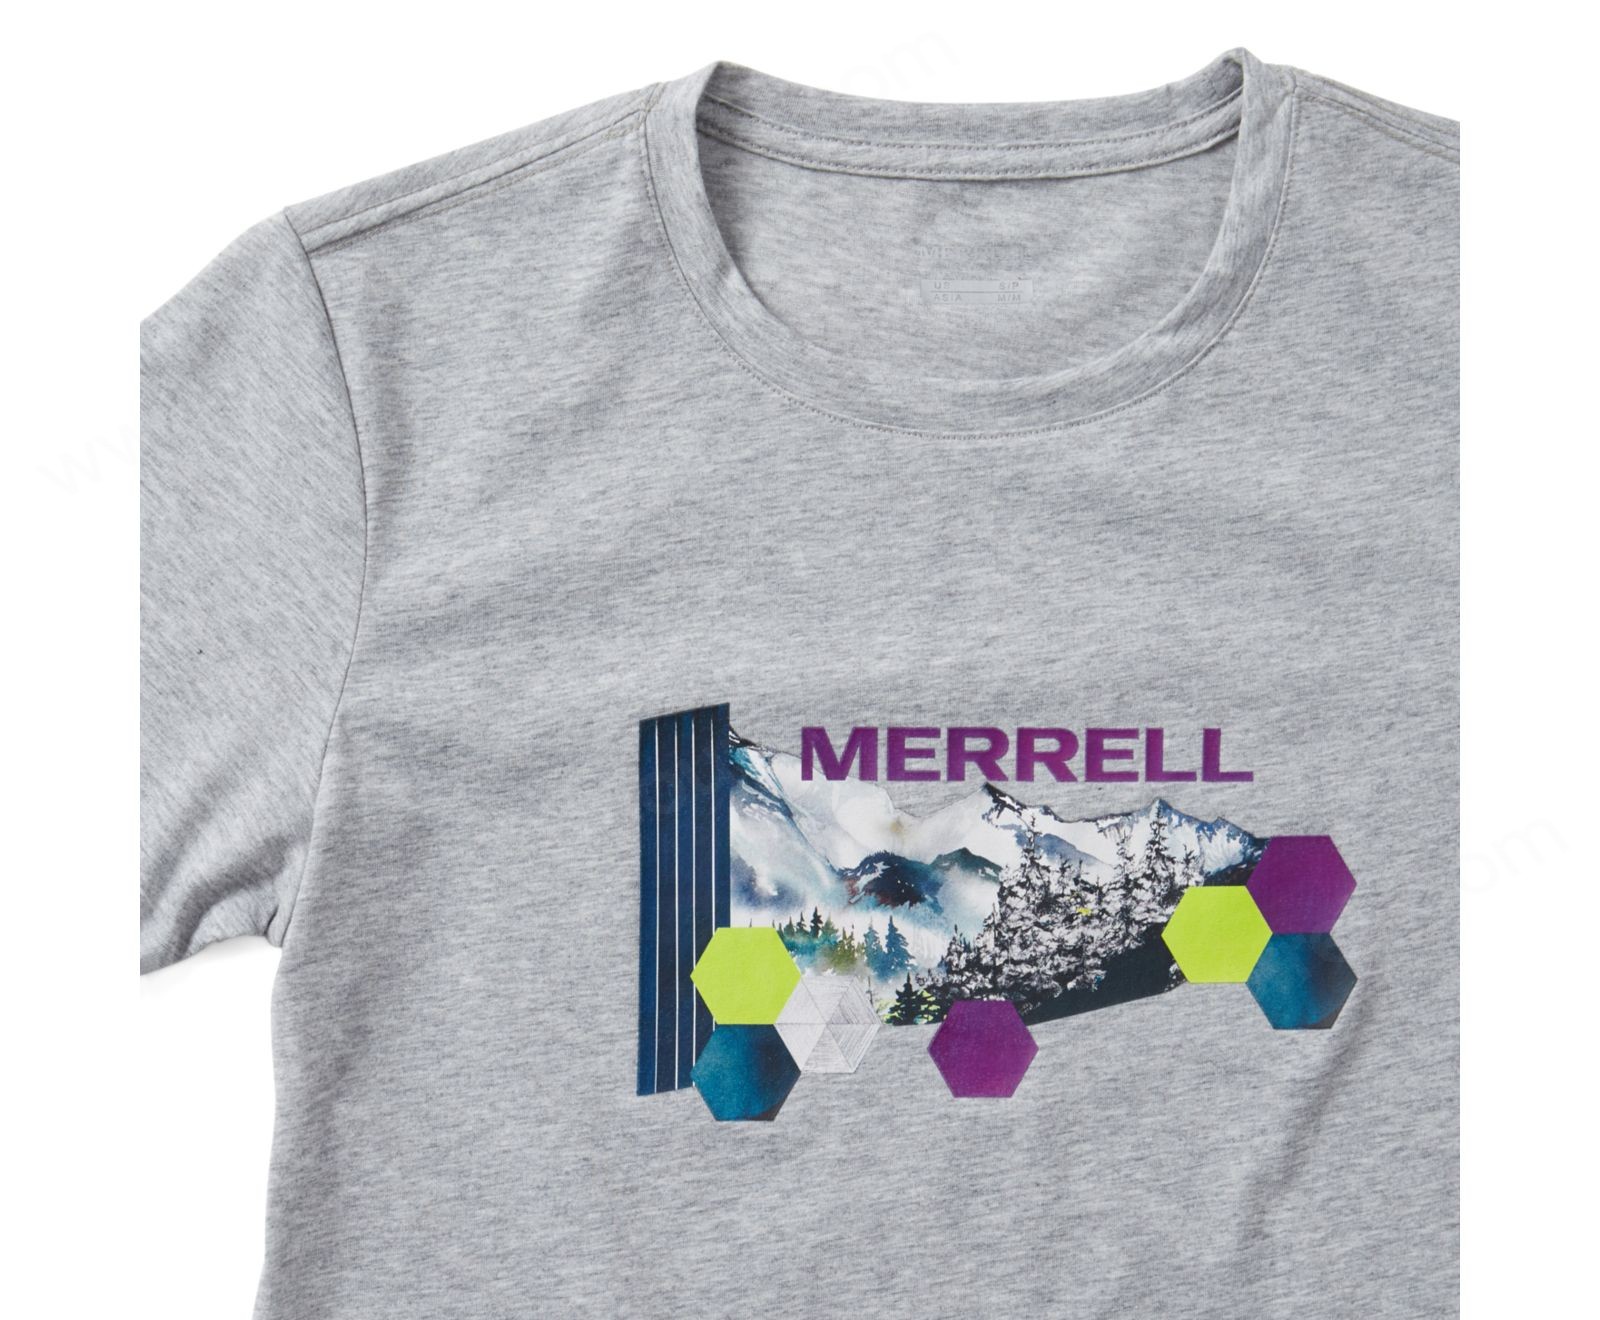 Merrell - Women's Woodmark Logo Short Sleeve Tee - Merrell - Women's Woodmark Logo Short Sleeve Tee